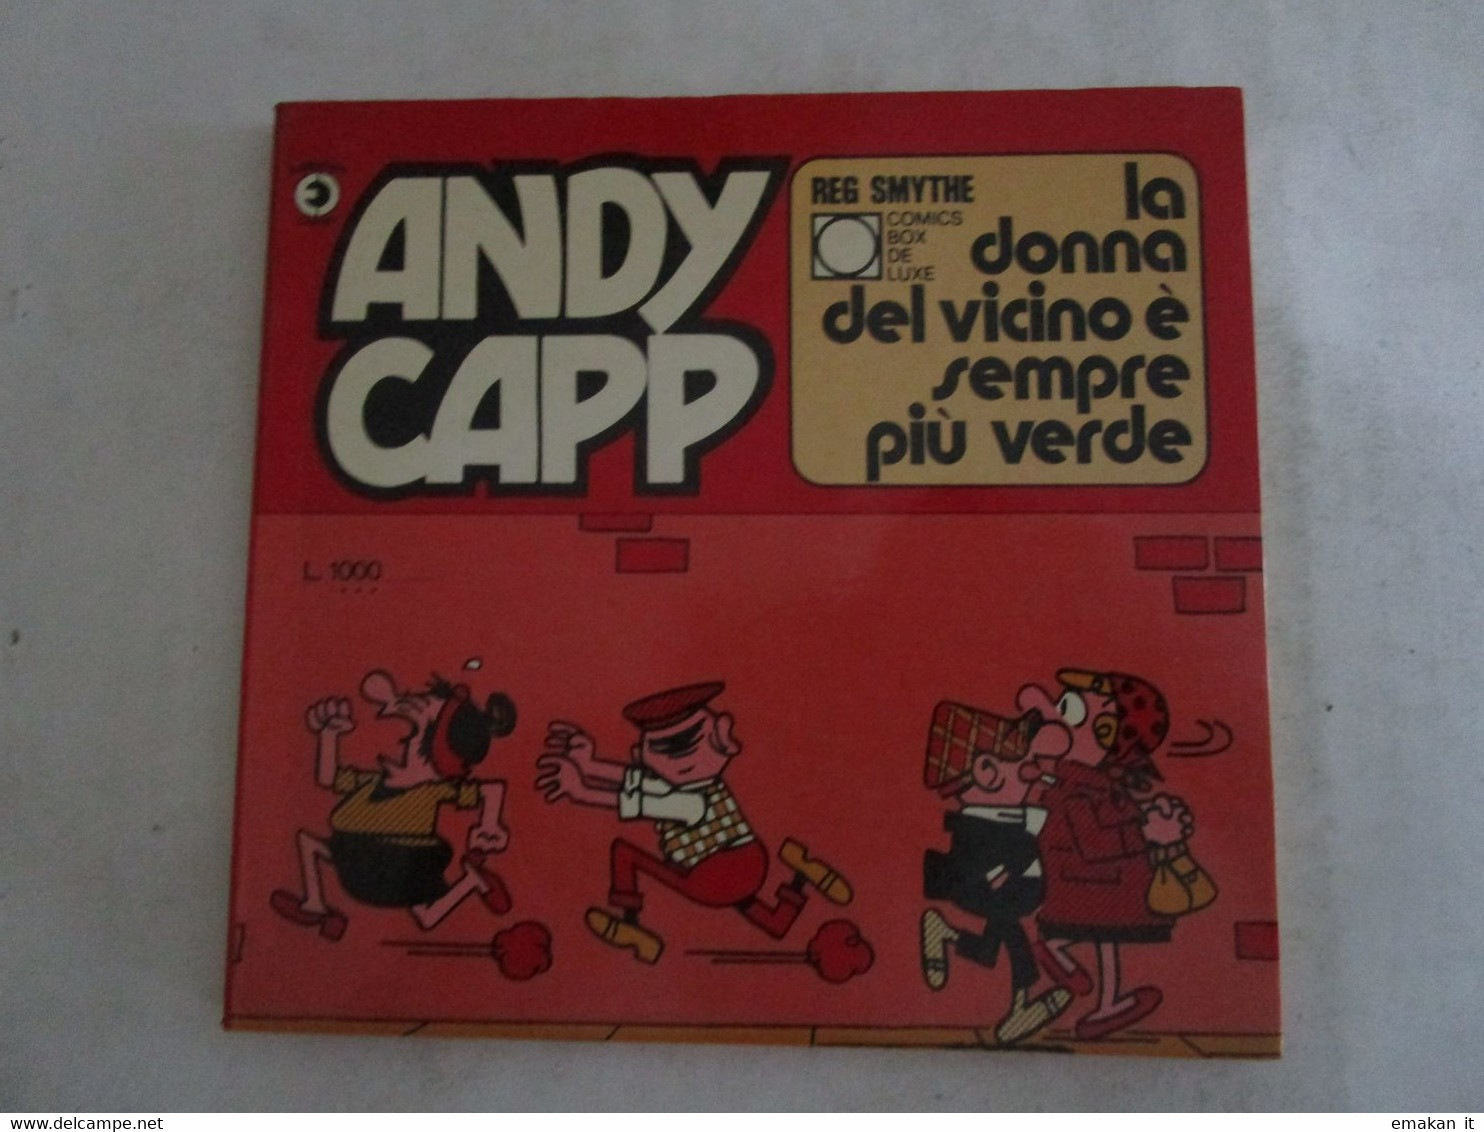 # ANDY CAPP N 40 / 1979 / COMICS BOX DE LUXE / LA DONNA DEL VICINO E' SEMPRE PIU' VERDE - Primeras Ediciones